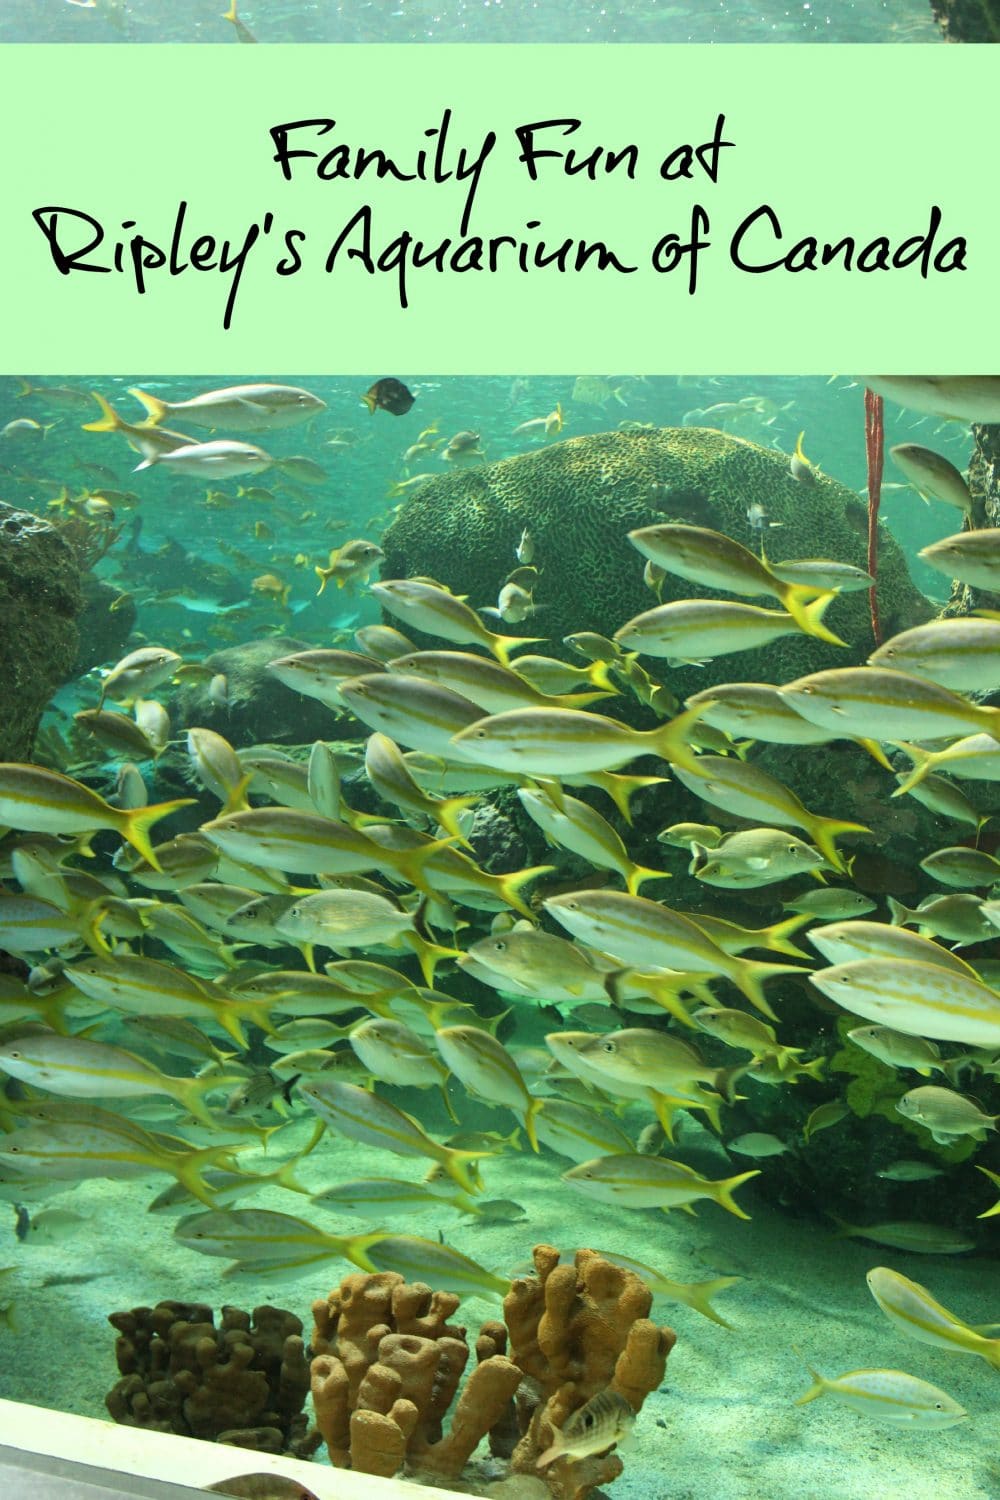 ripley's aquarium of Canada Toronto